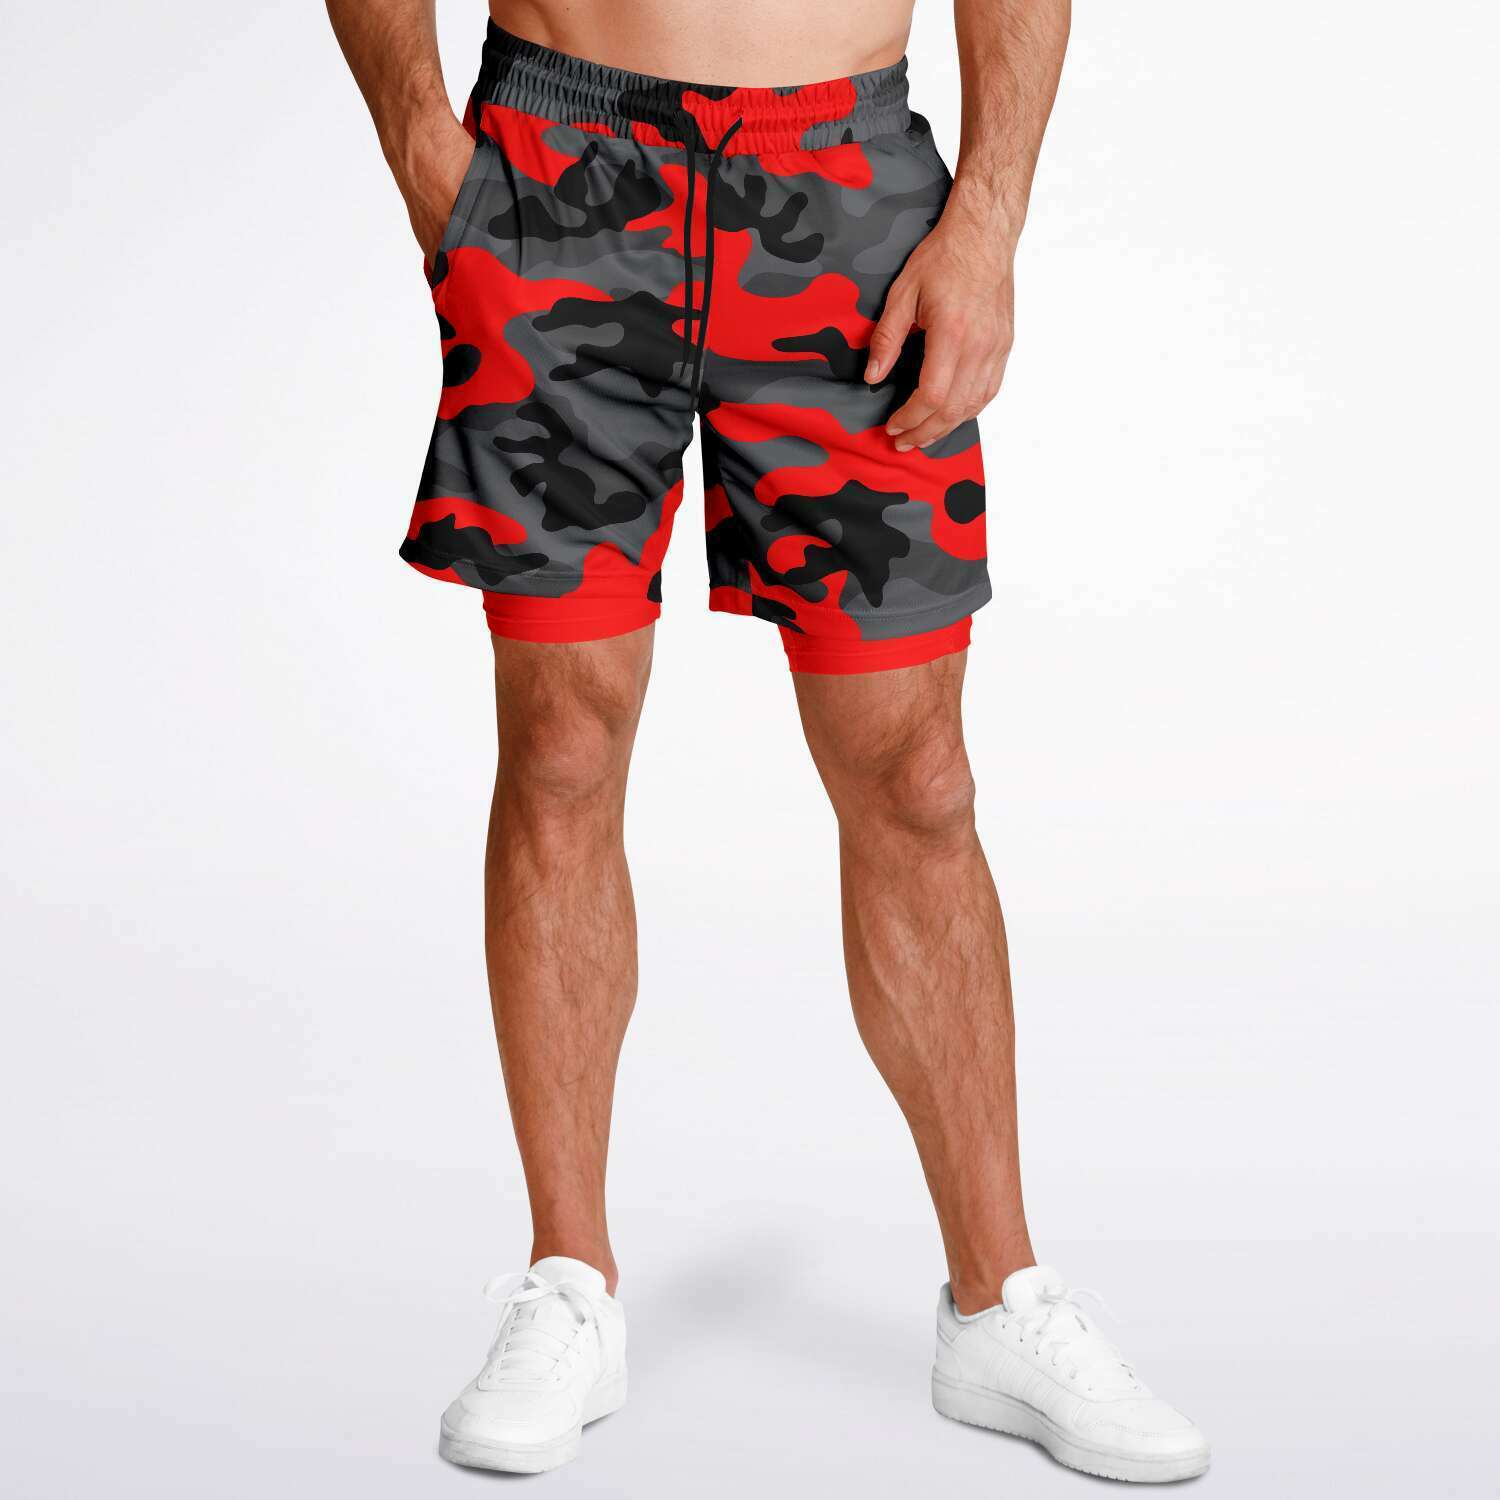 Black Red Camo Shorts